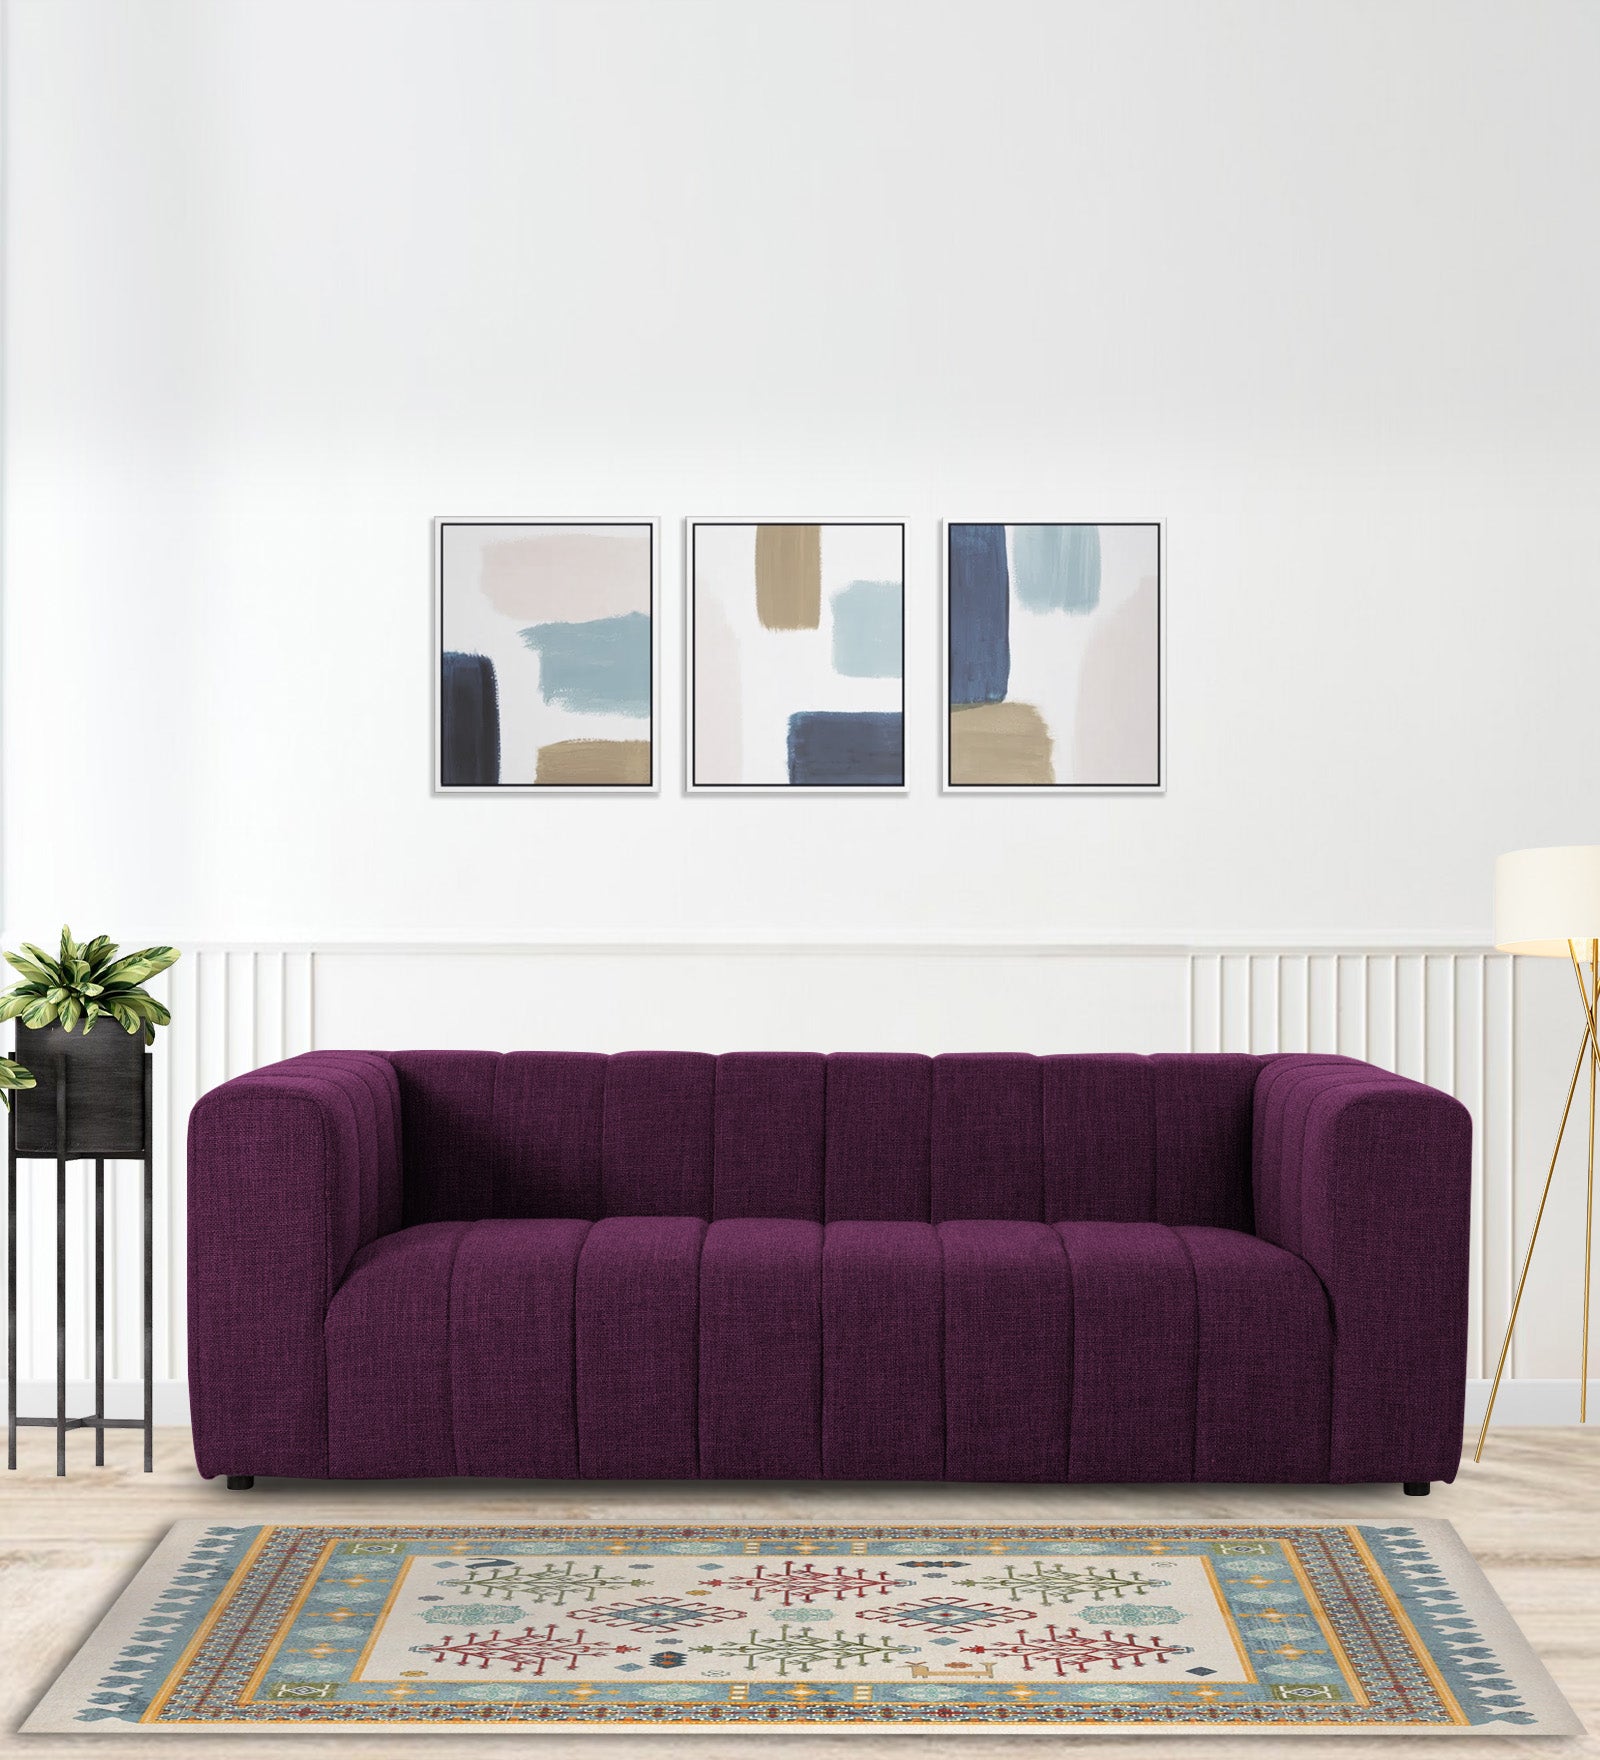 Lara Fabric 3 Seater Sofa in Greek Purple Colour